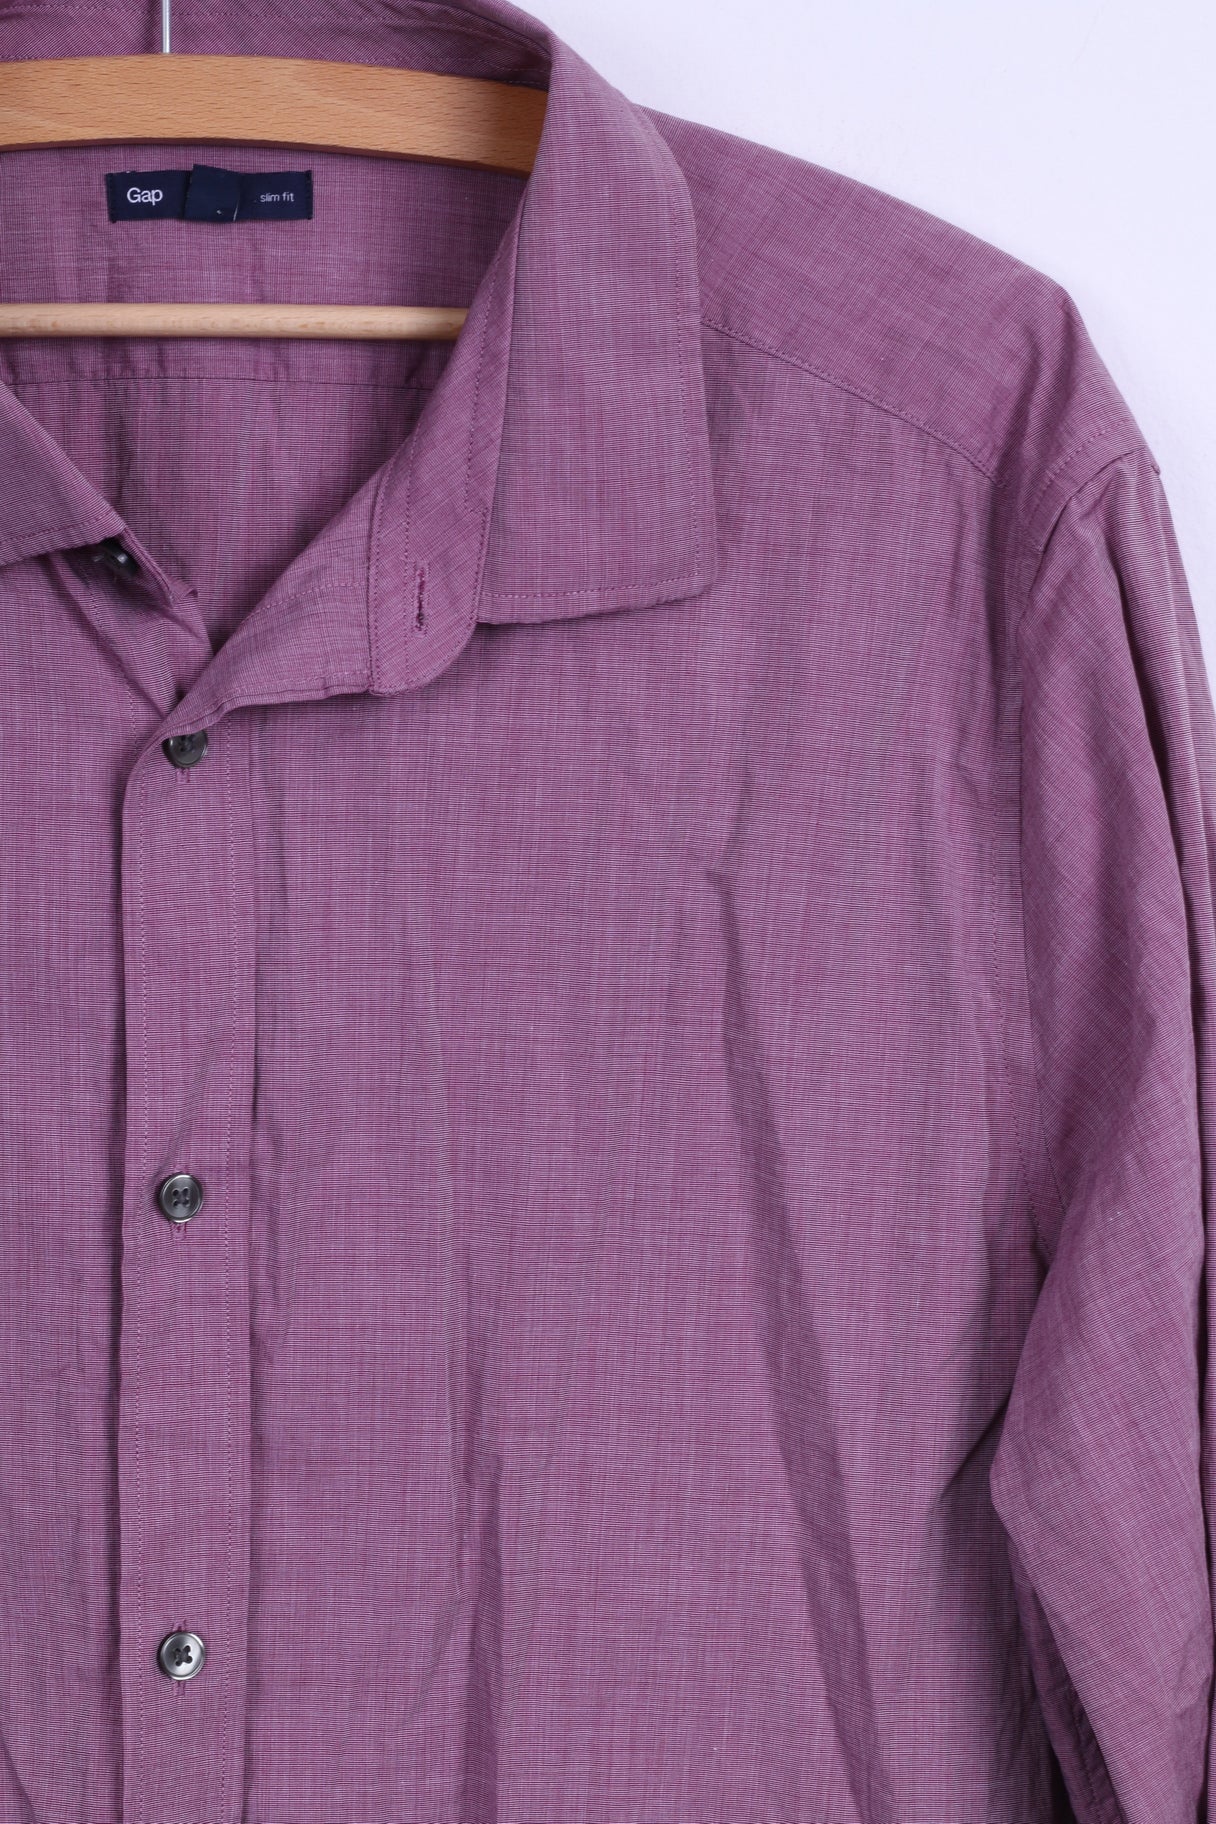 Gap Mens XL Casual Shirt Cotton Violet Slim Fit Long Sleeve